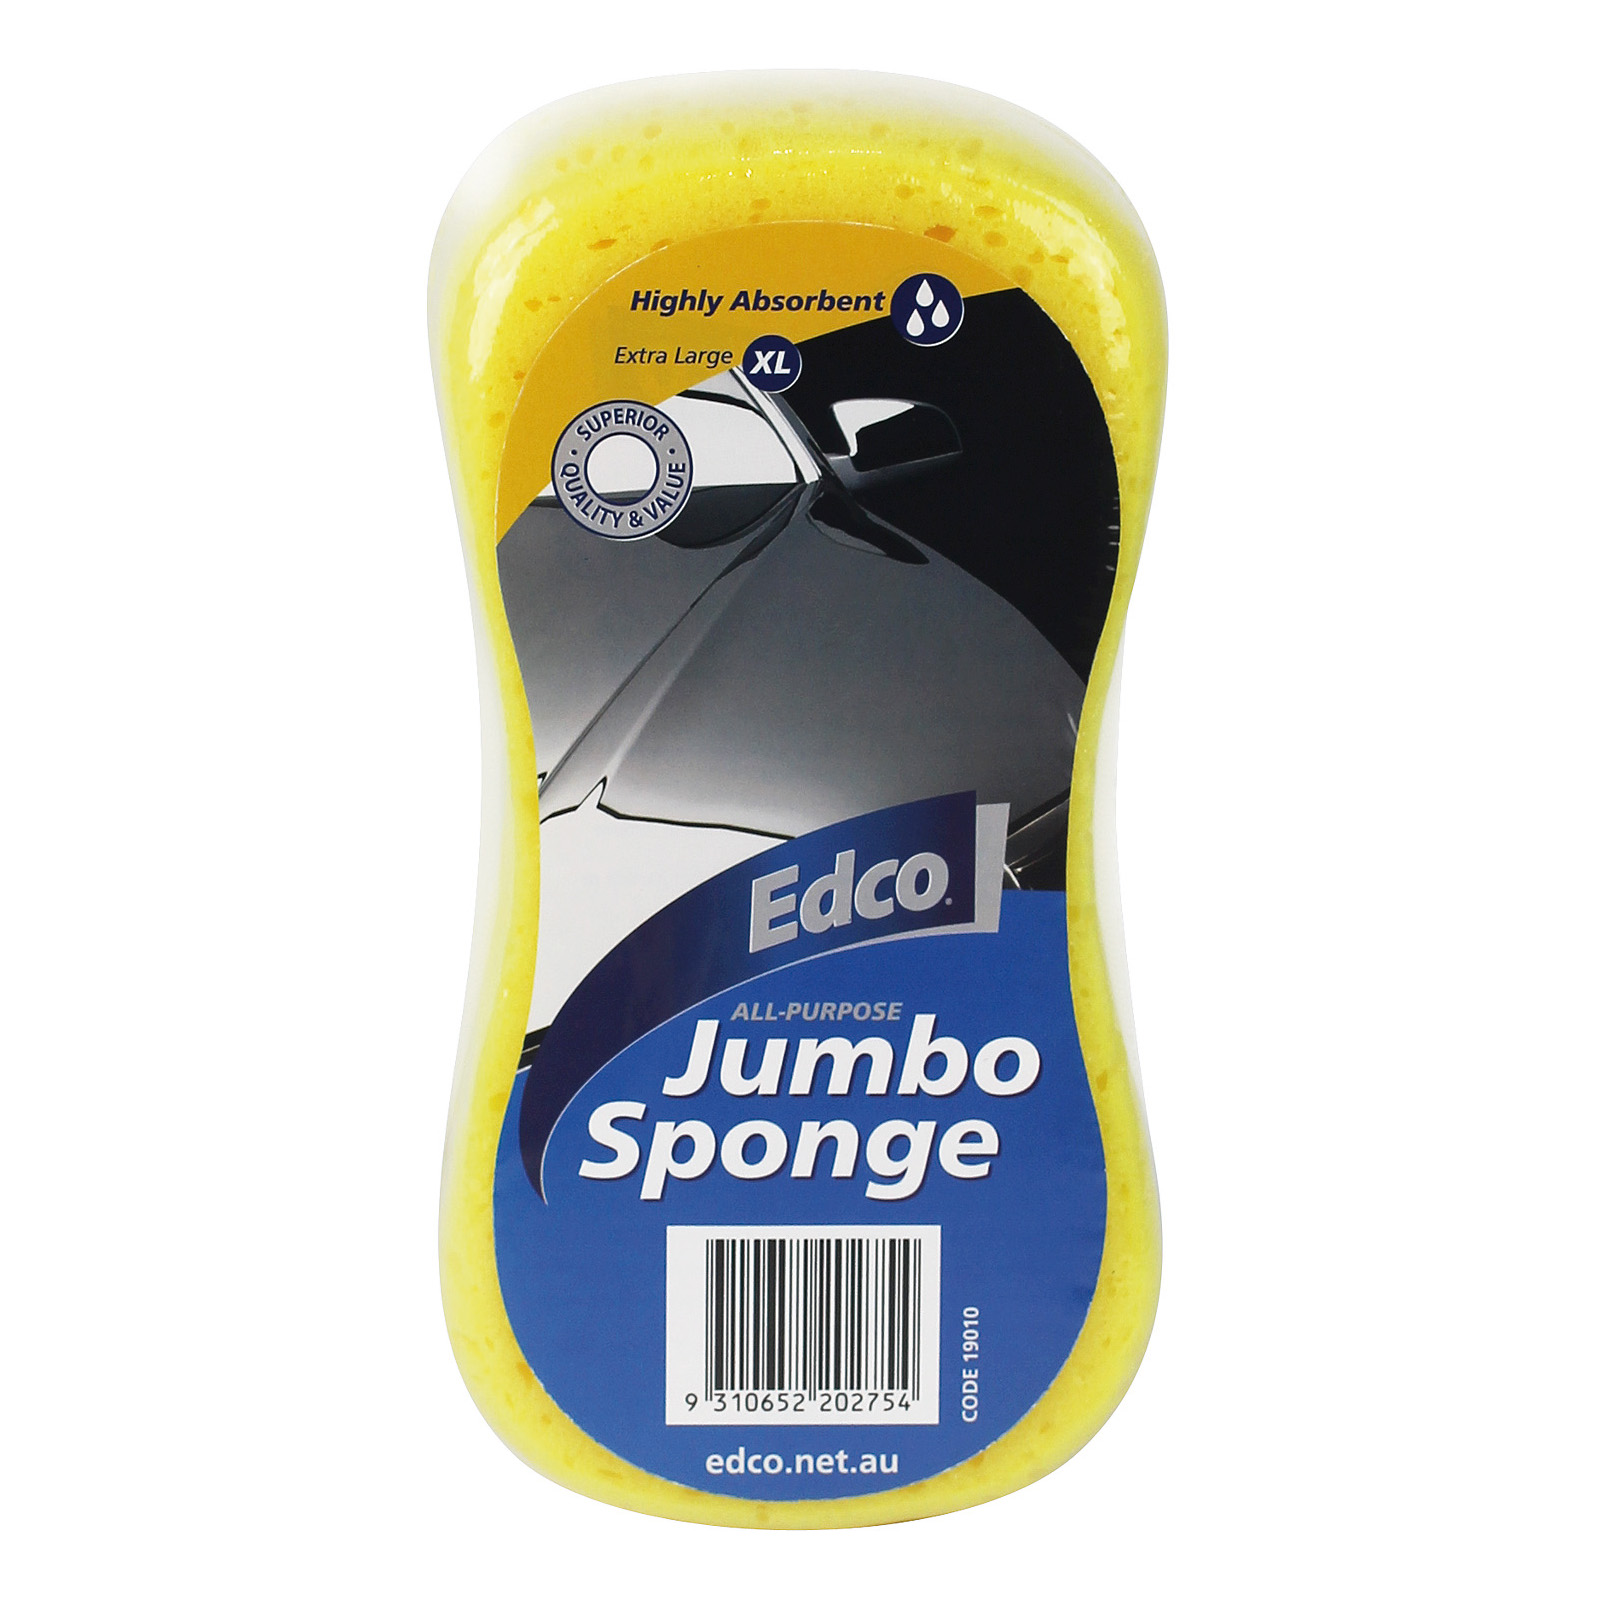 All-Purpose Giant Sponge